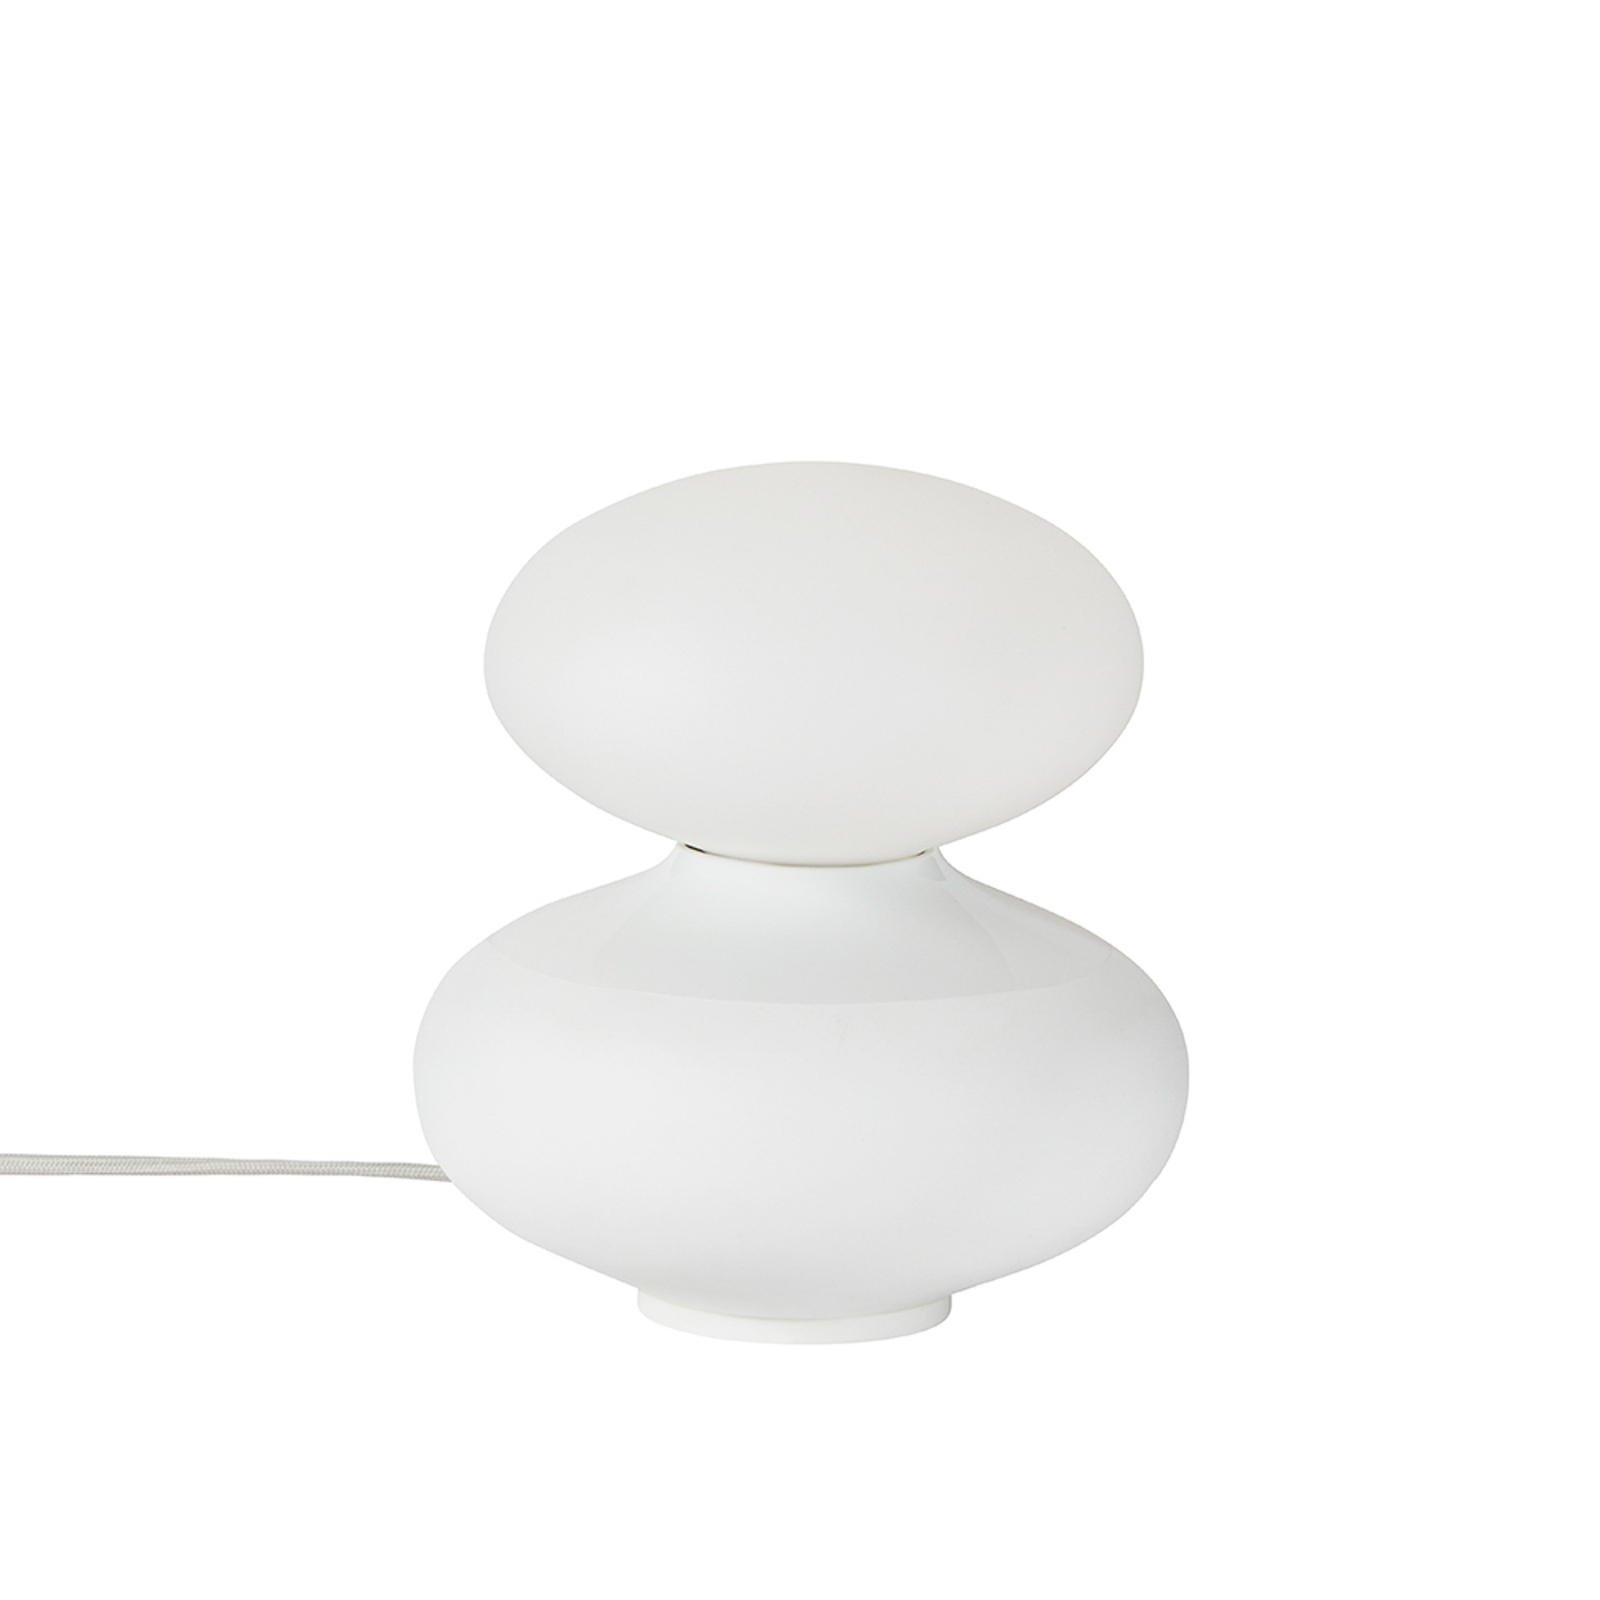 Tala tafellamp Reflection Oval, ontwerp David Weeks